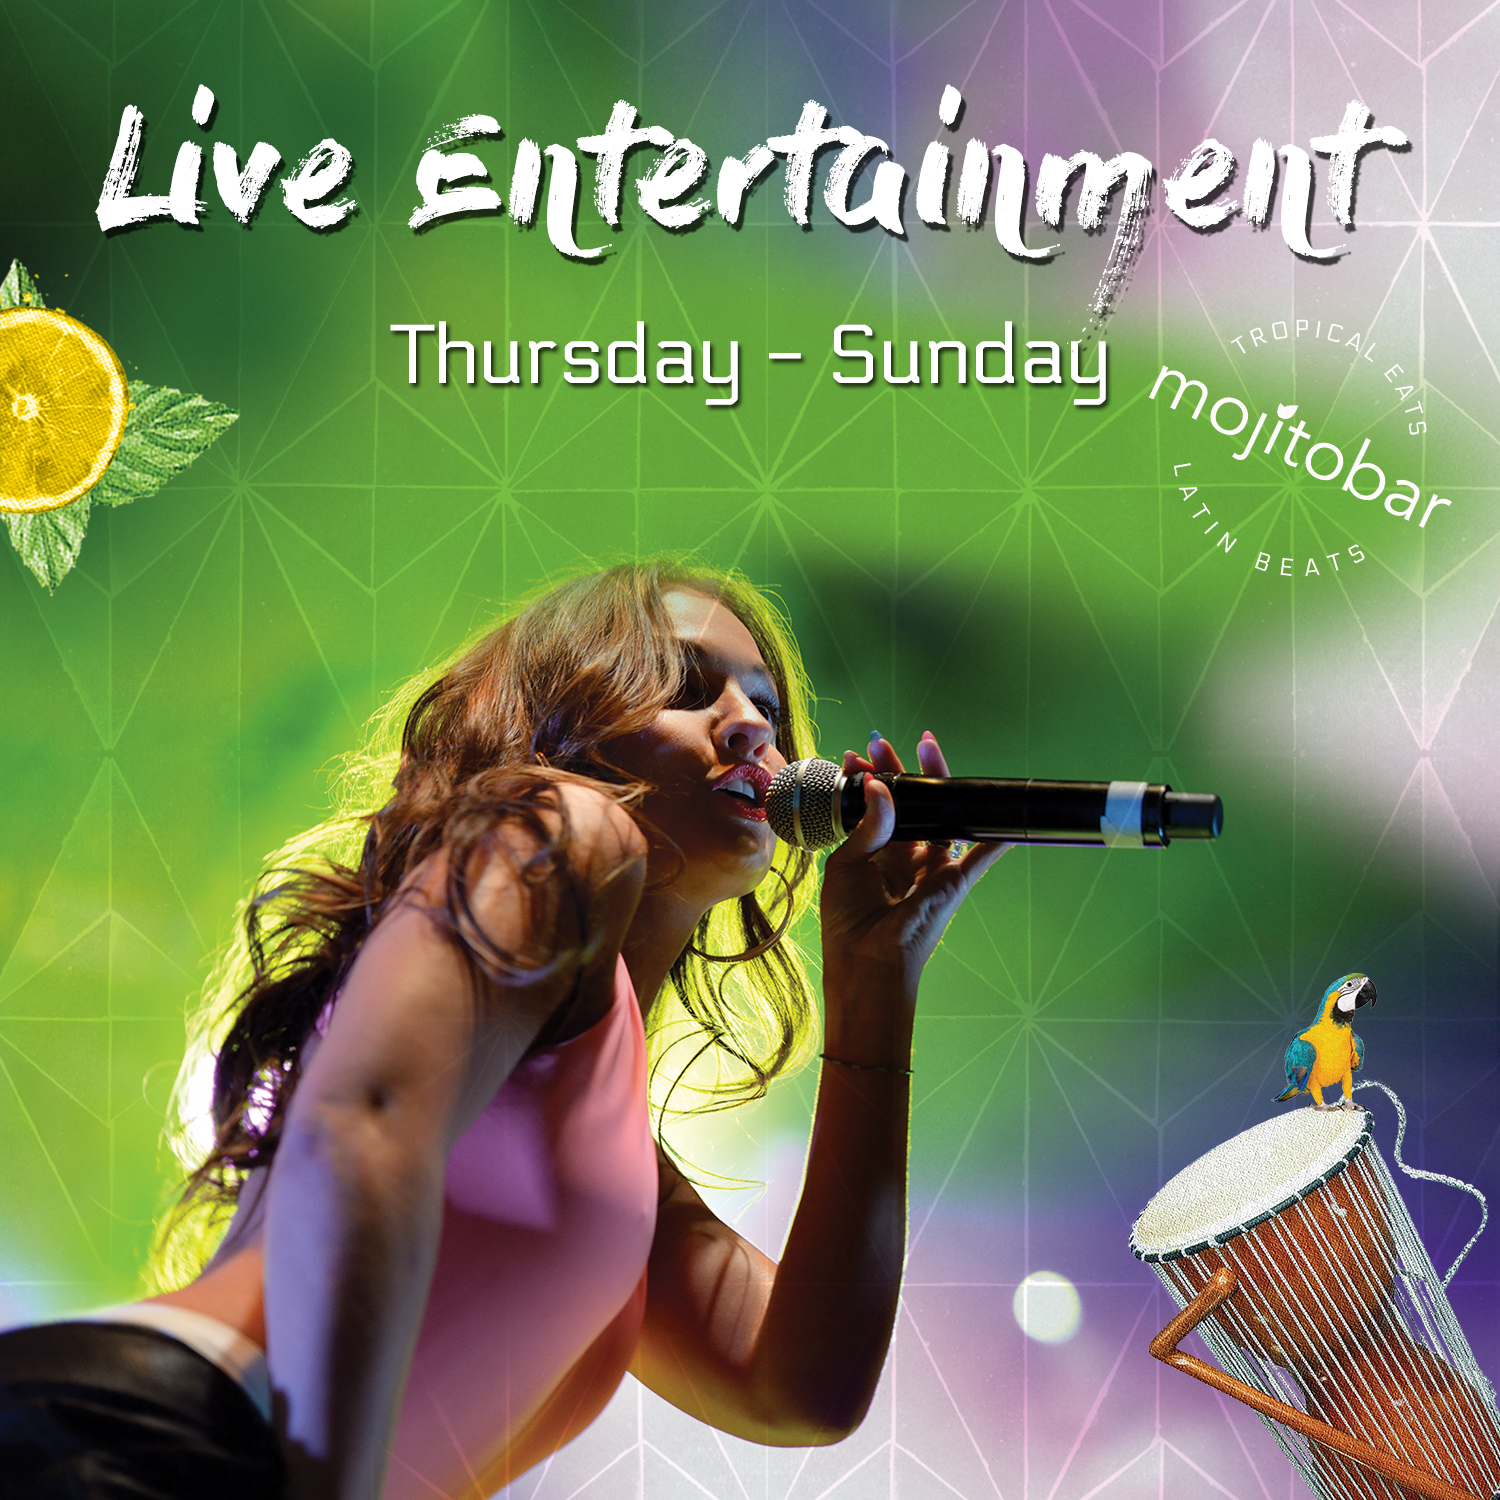 Mojitobar live entertainment Thursday through Sunday